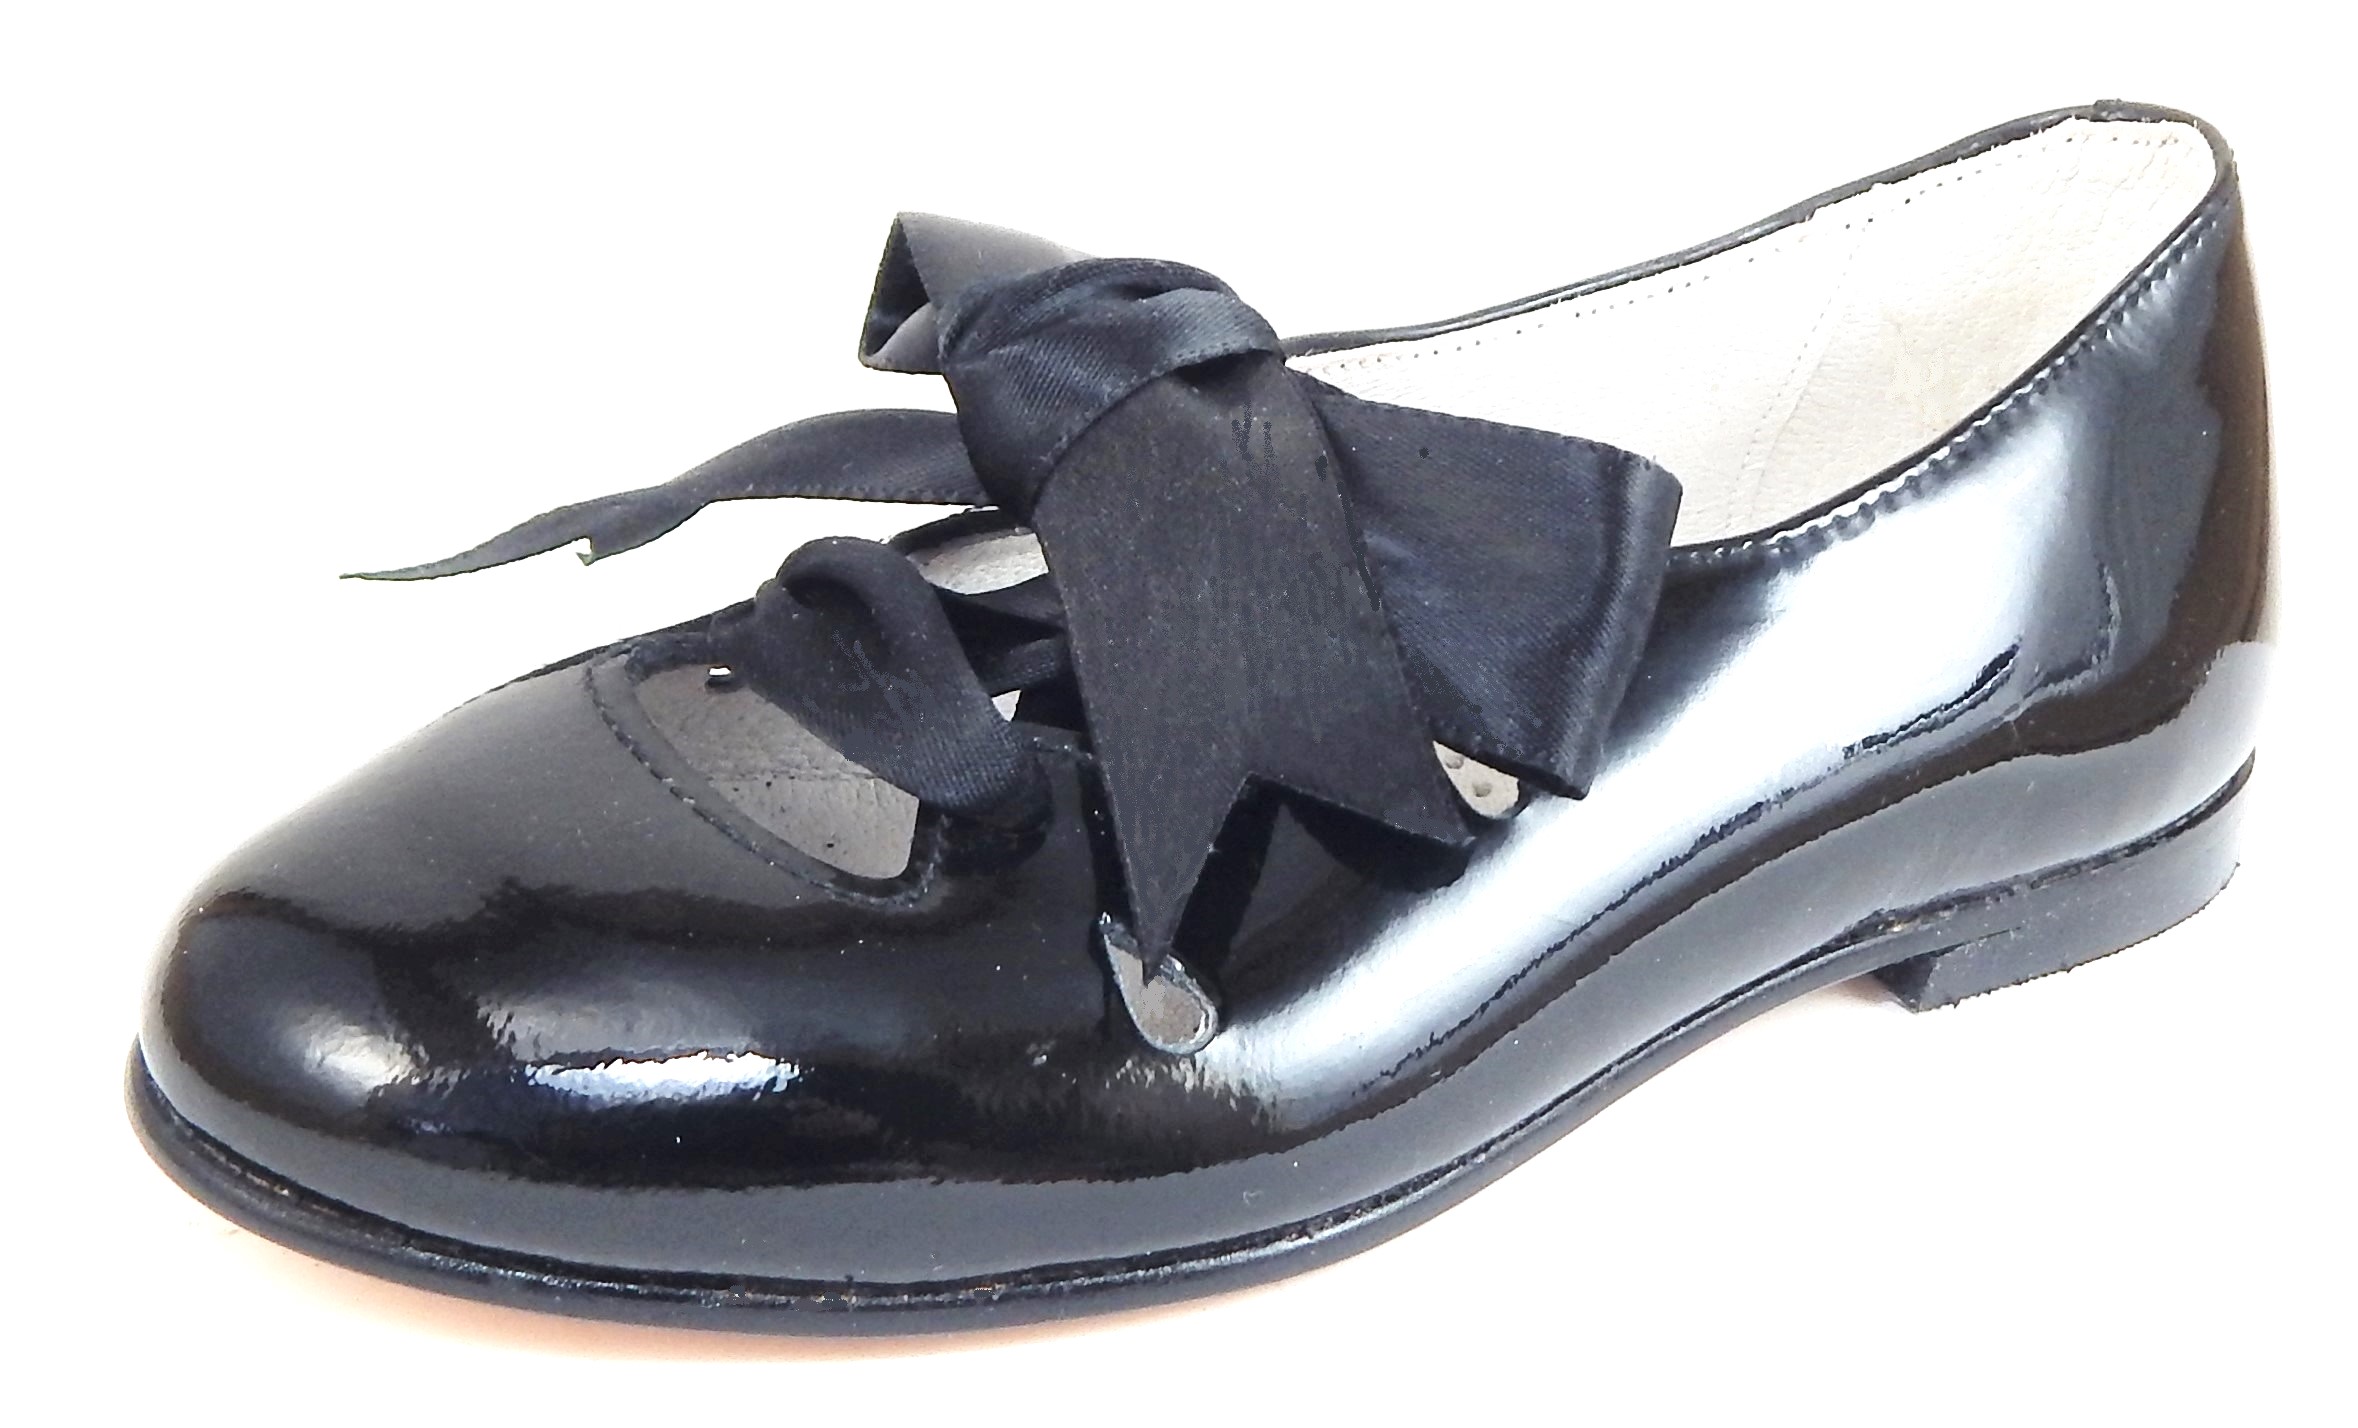 A-1123 - Black Patent Ghillie Shoes